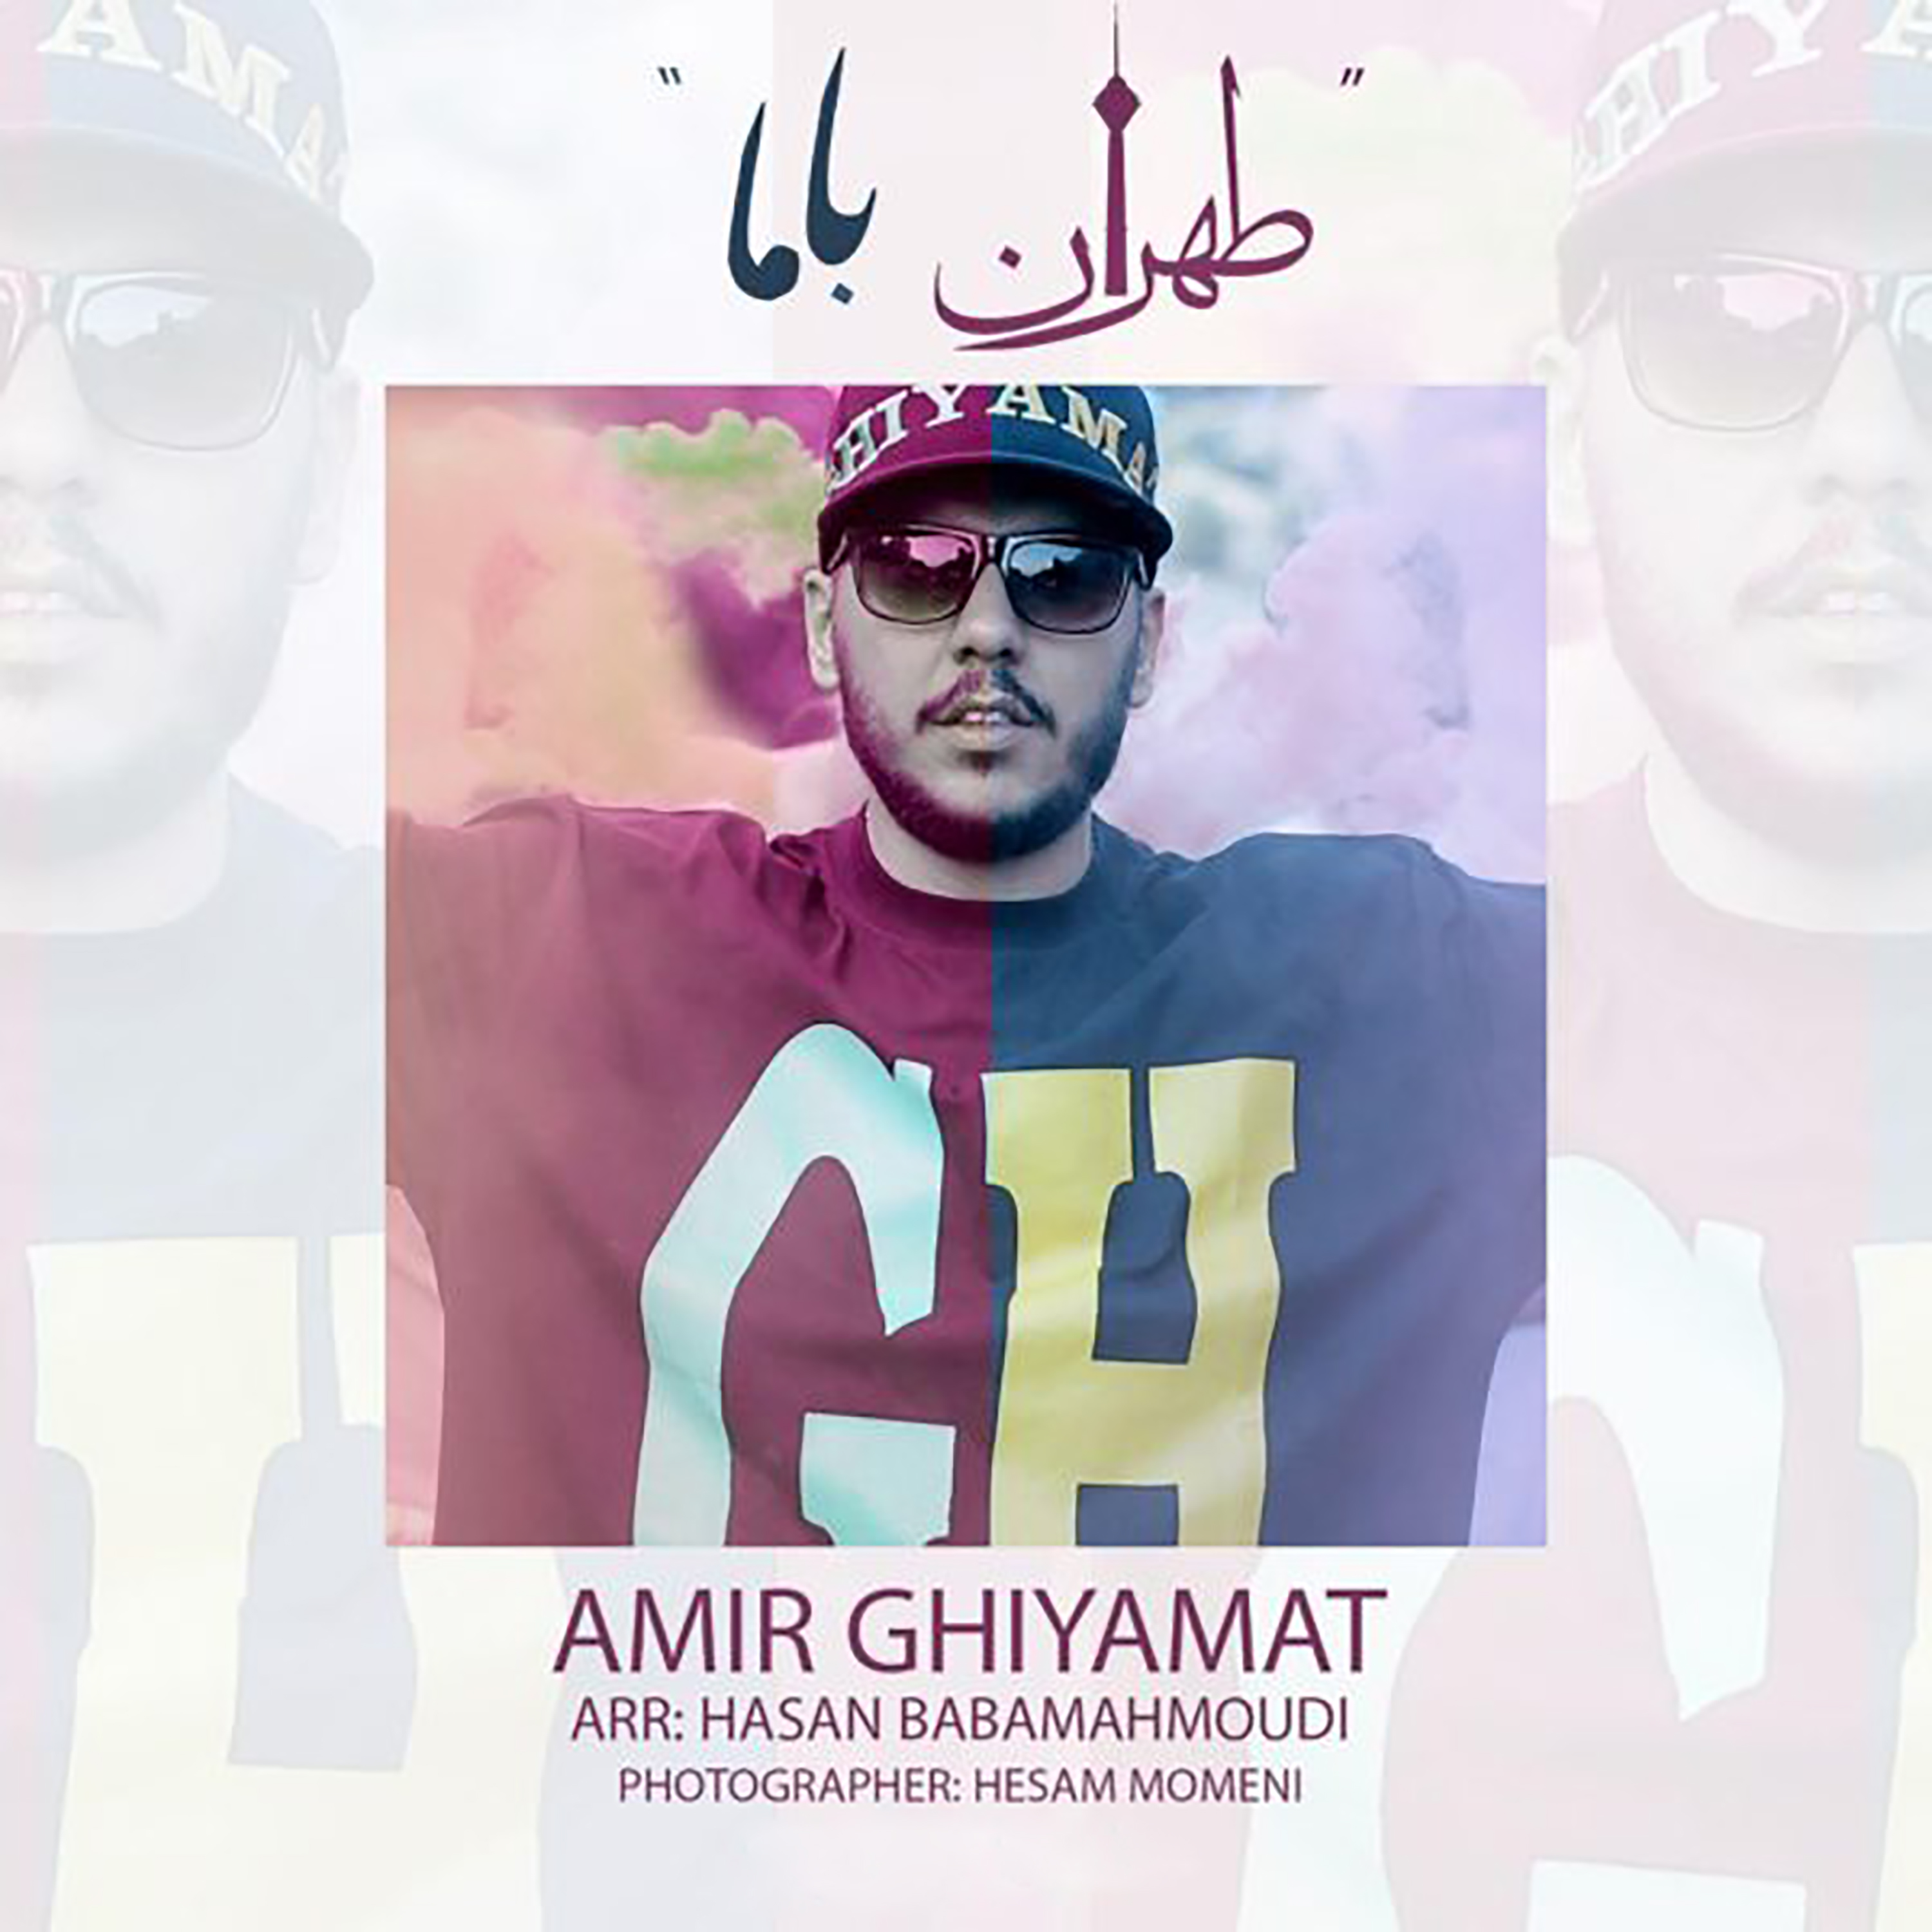  دانلود آهنگ جدید امیر قیامت - طهران باما | Download New Music By Amir Ghiyamat - Tehran Bama